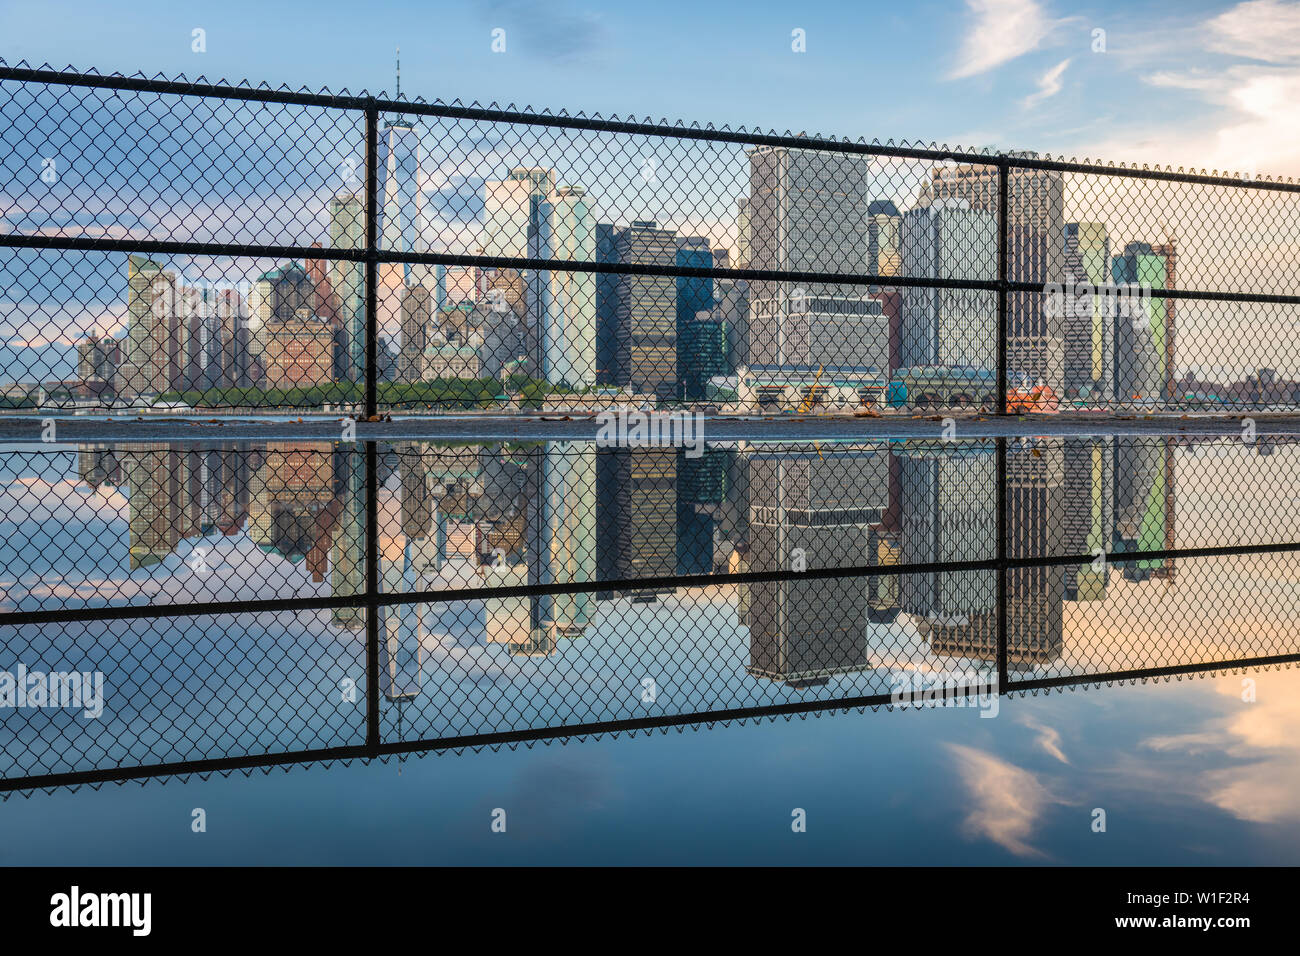 New York, New York, USA city skyline of Lower Manhattan on the New York harbor through fencing. Stock Photo